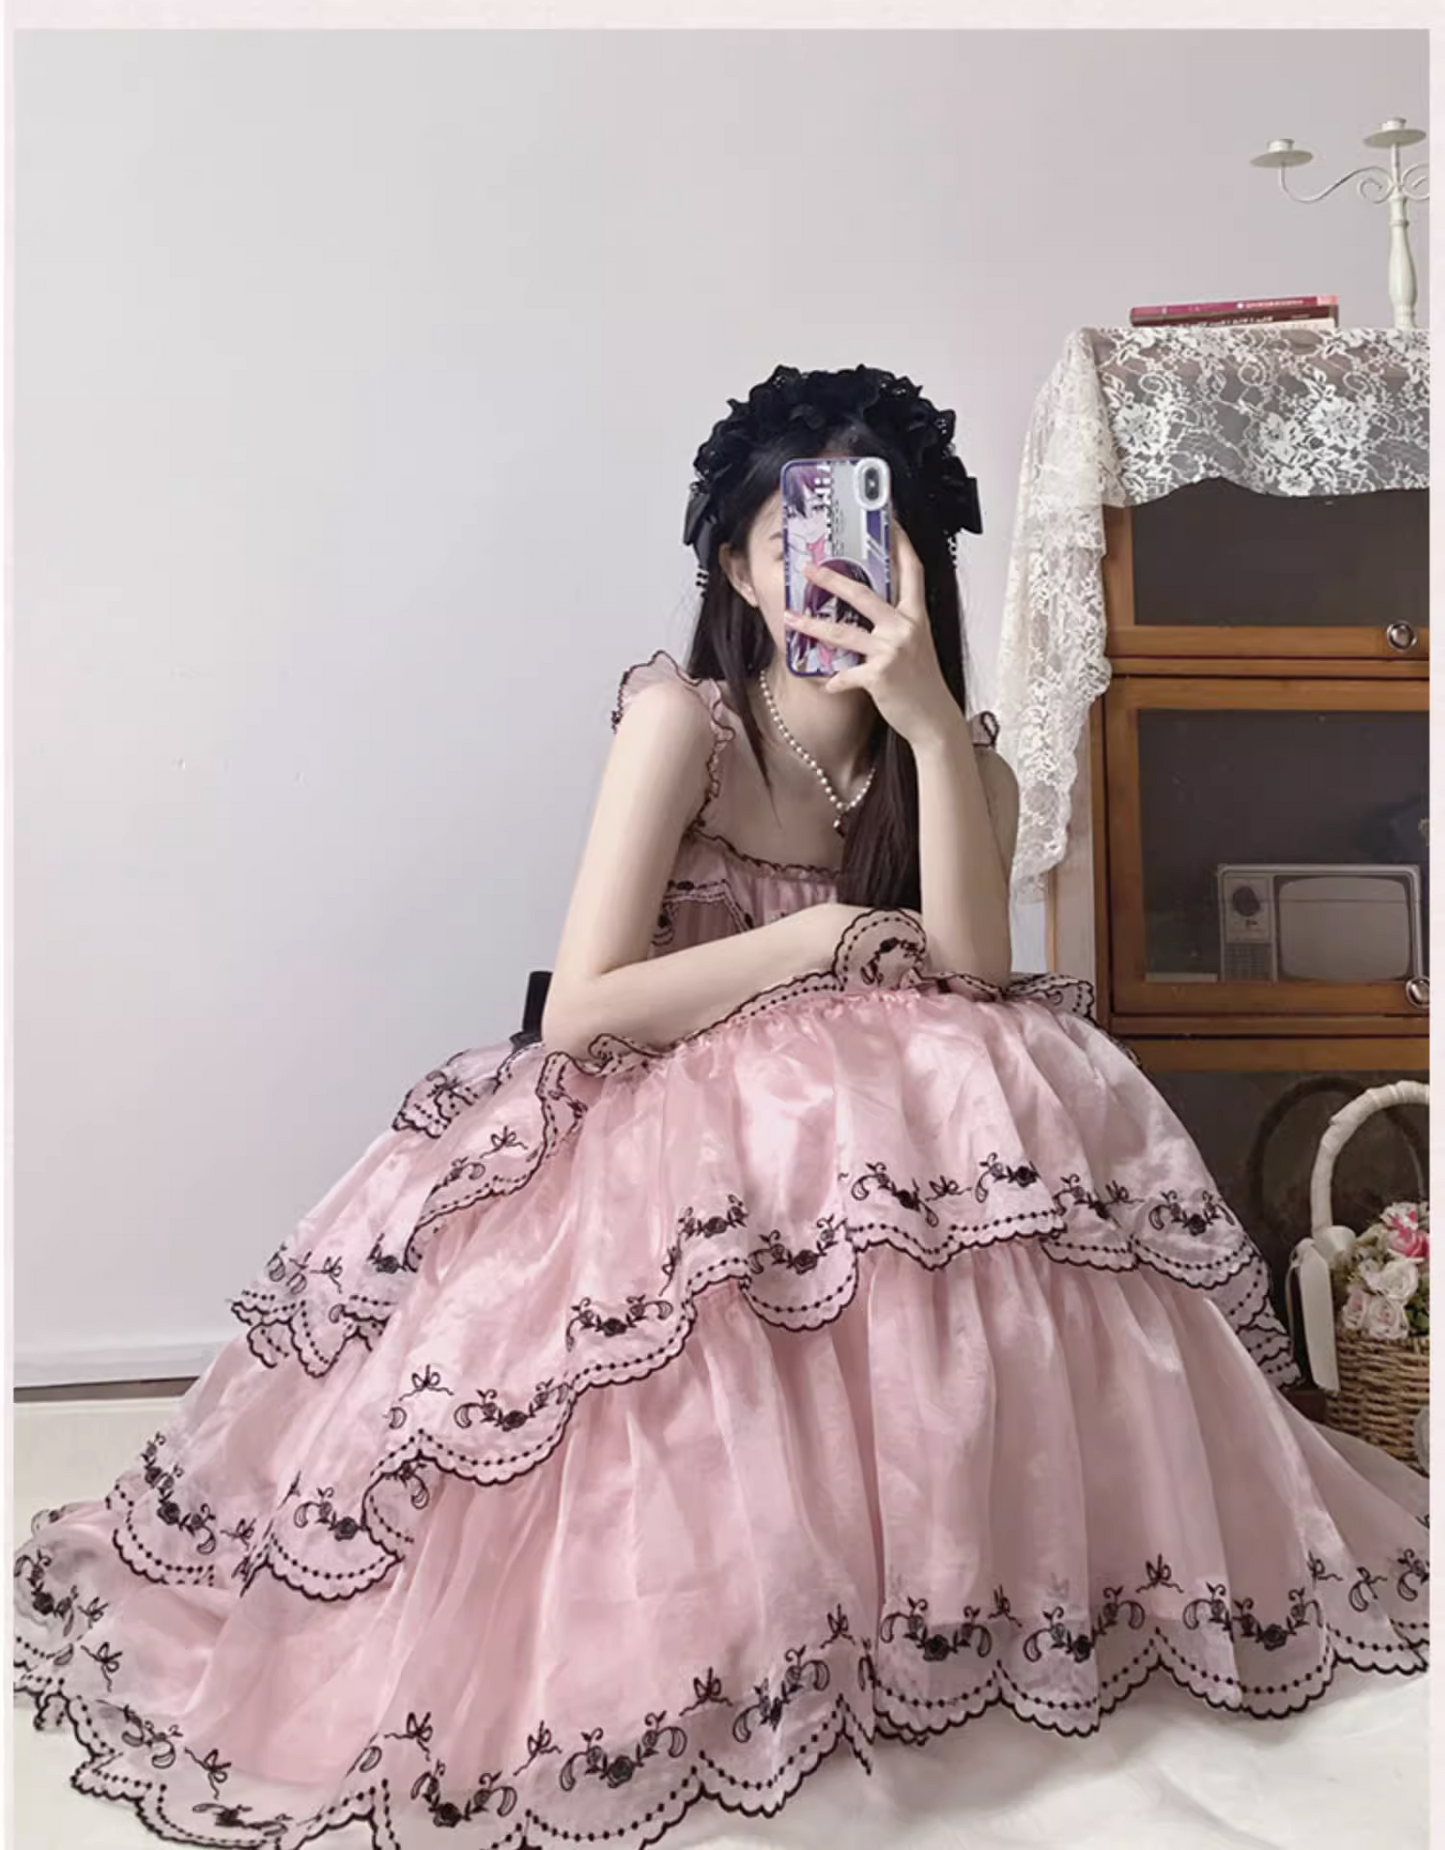 Rose embroidery black pink 4-tier jumper skirt